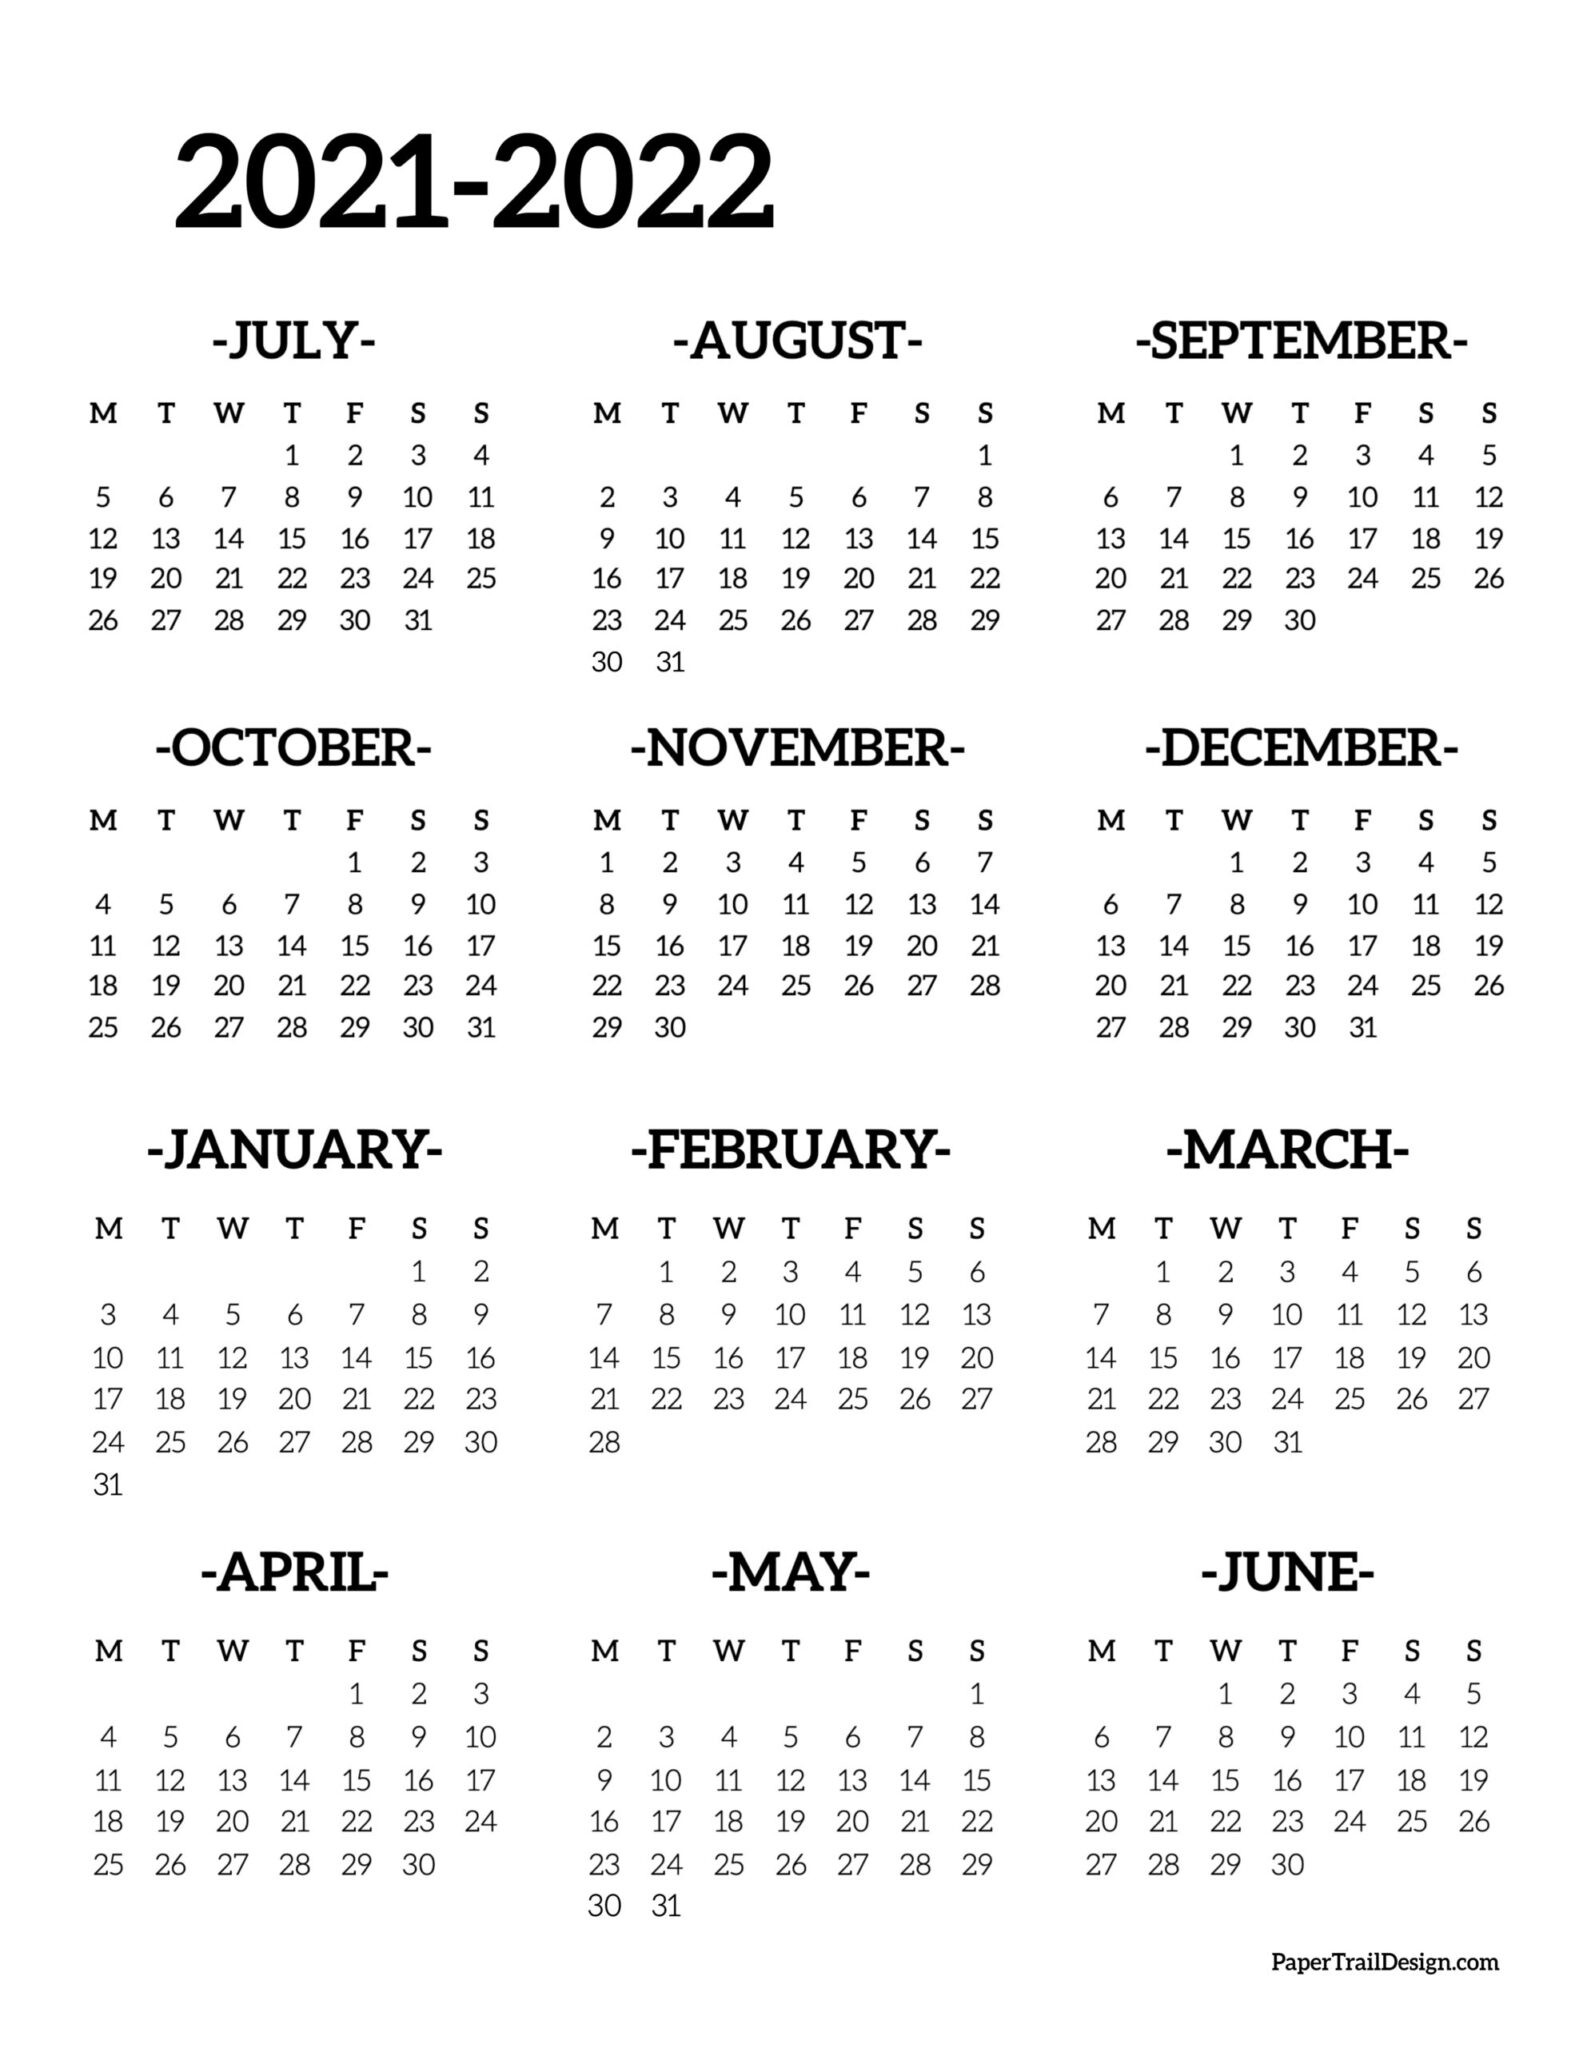 2021-2022 School Year Calendar Free Printable - Paper Trail Design-Printable Calendar 2021 To 2022